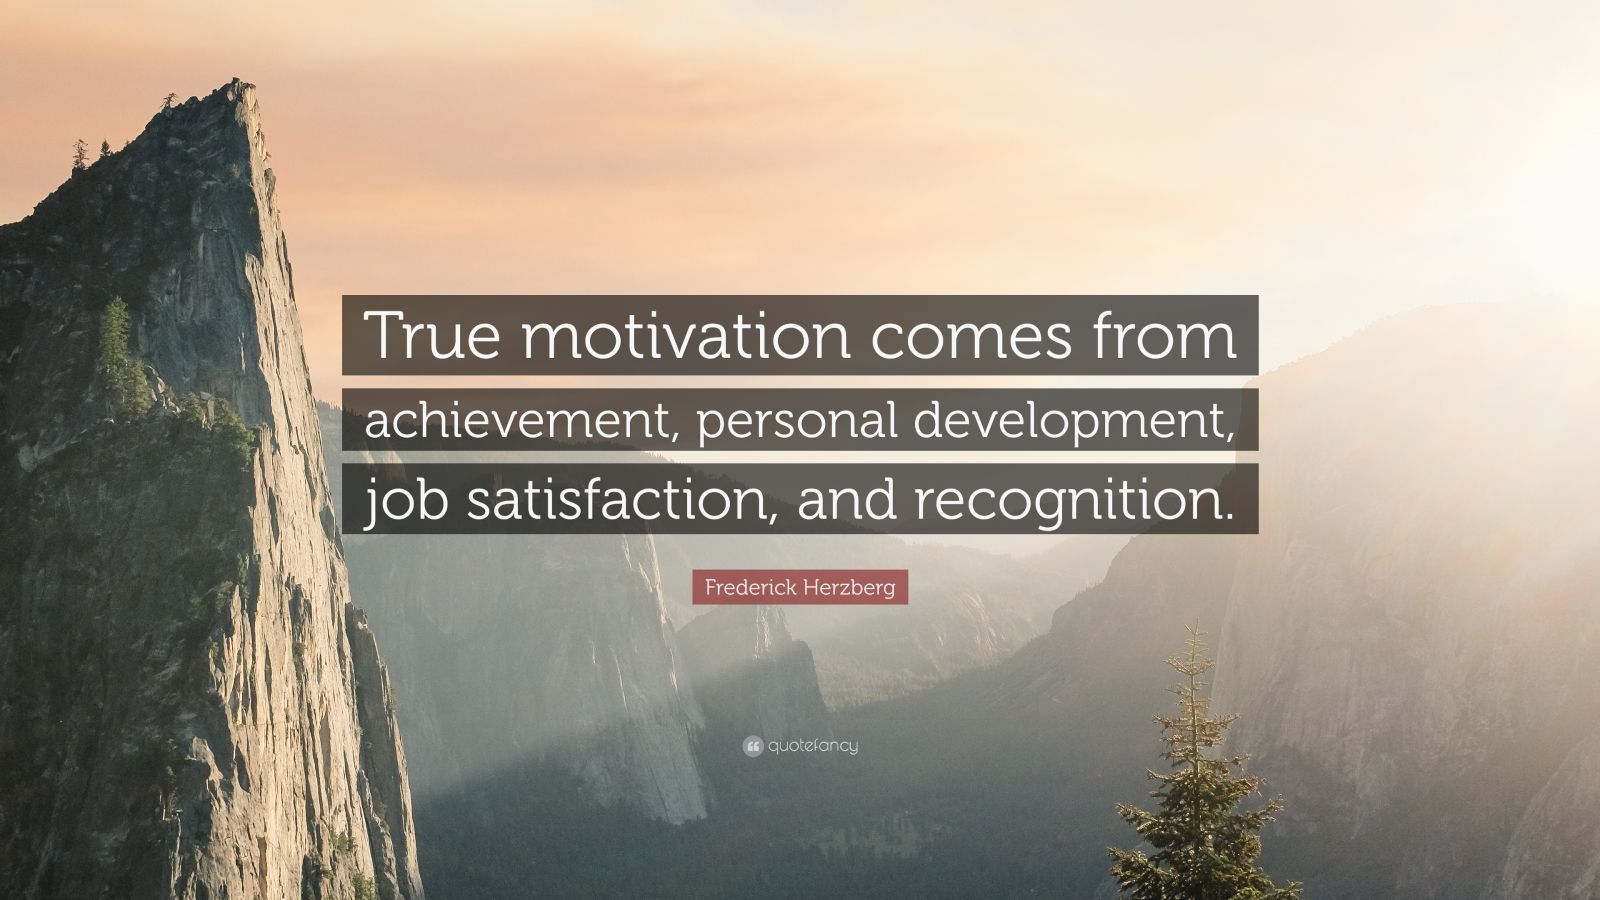 Frederick Herzberg Quote: “True motivation comes from achievement